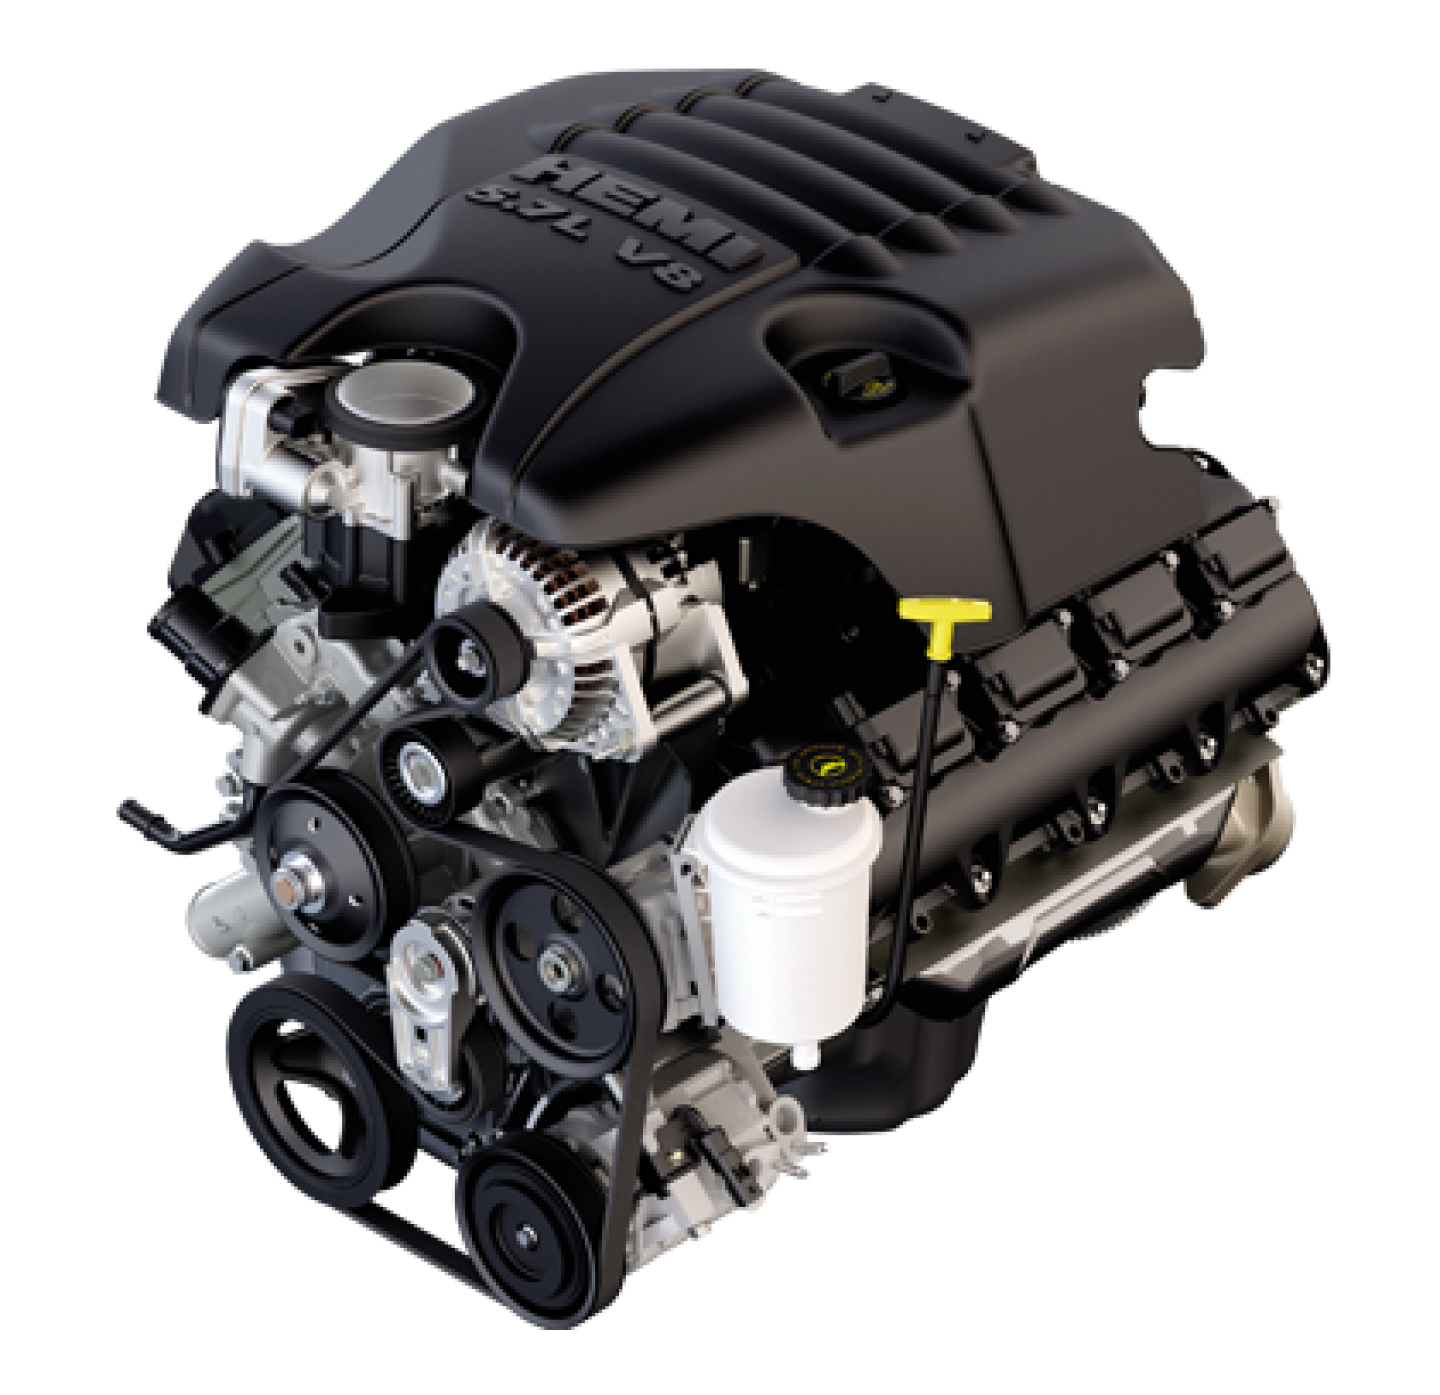 Мотор Hemi v8. Двигатель dodge Ram 5.7 Hemi. Hemi 5.7 v8. Двигатель Chrysler Hemi v8 5,7. Атс двигатель